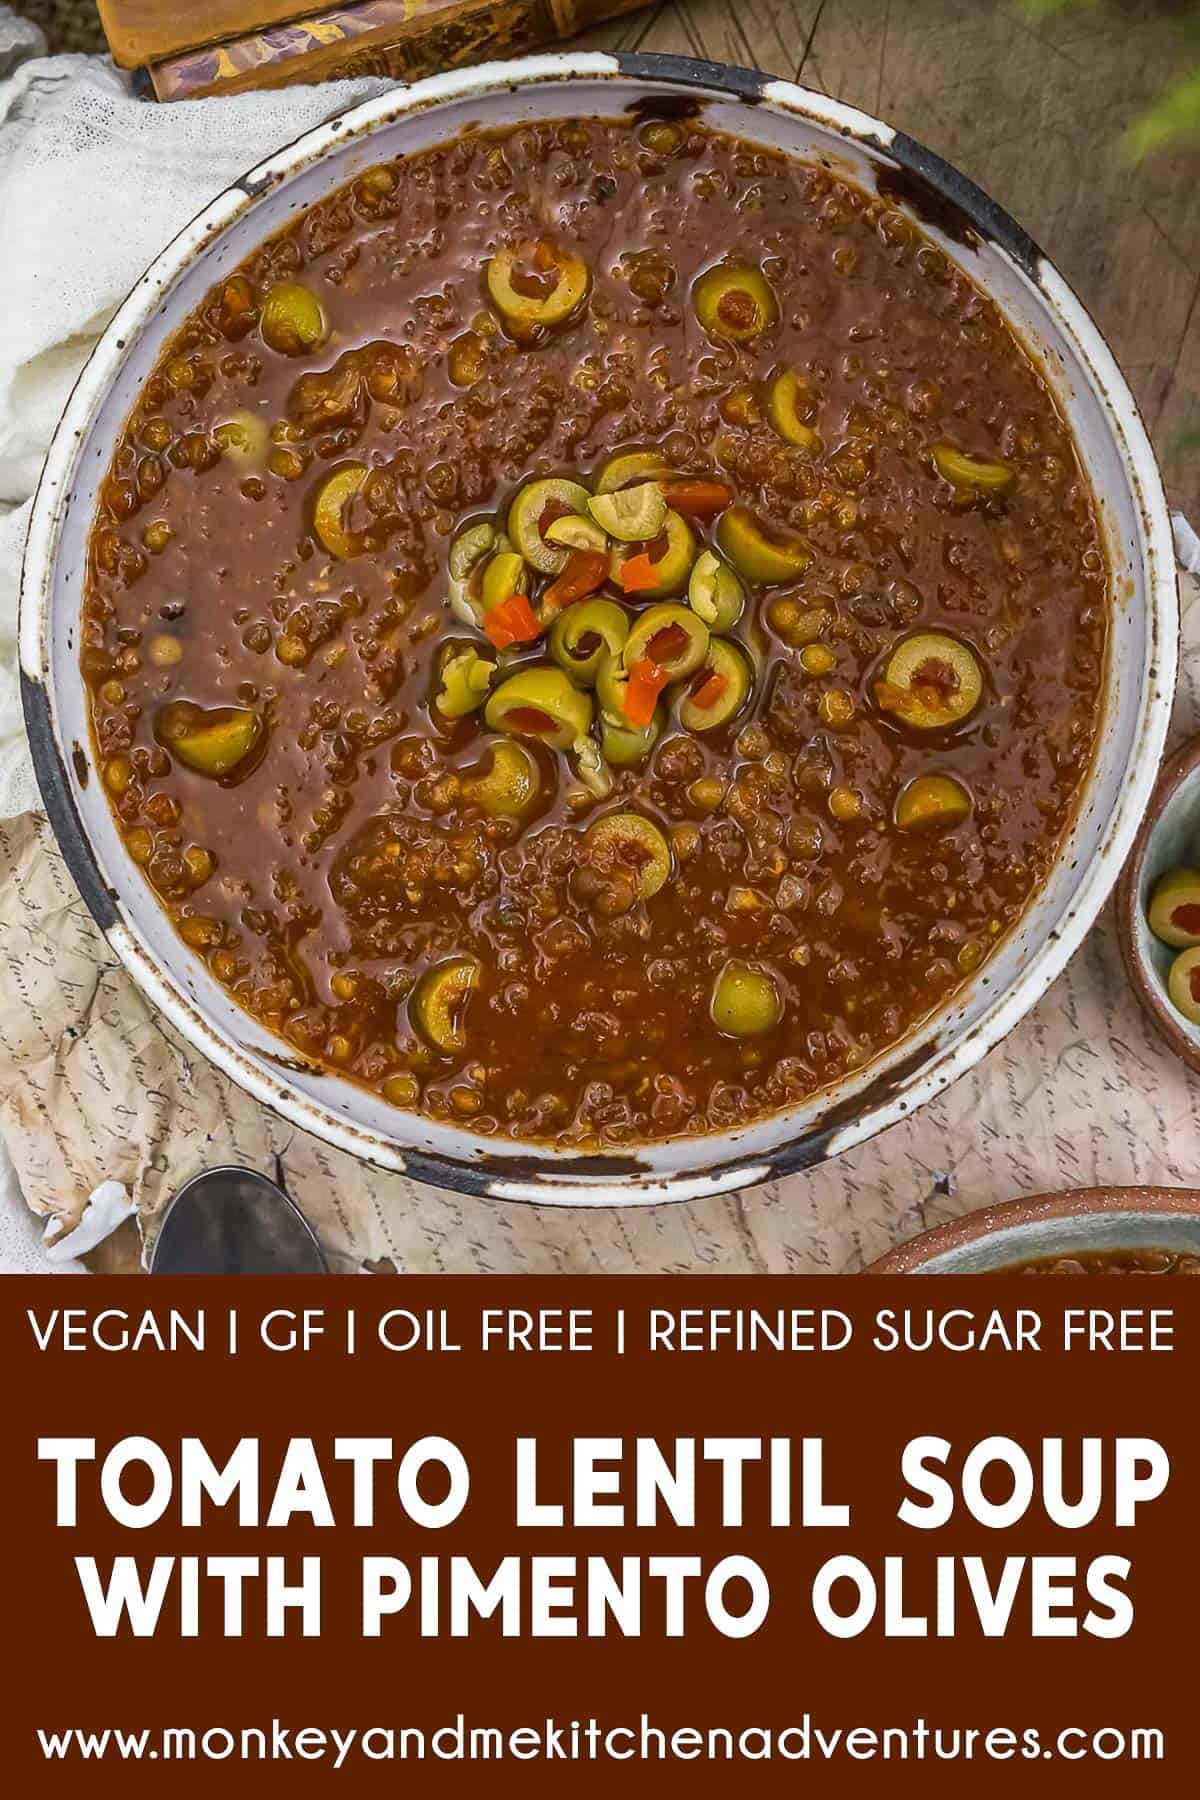 Tomato Lentil Soup with Pimento Olives with text description